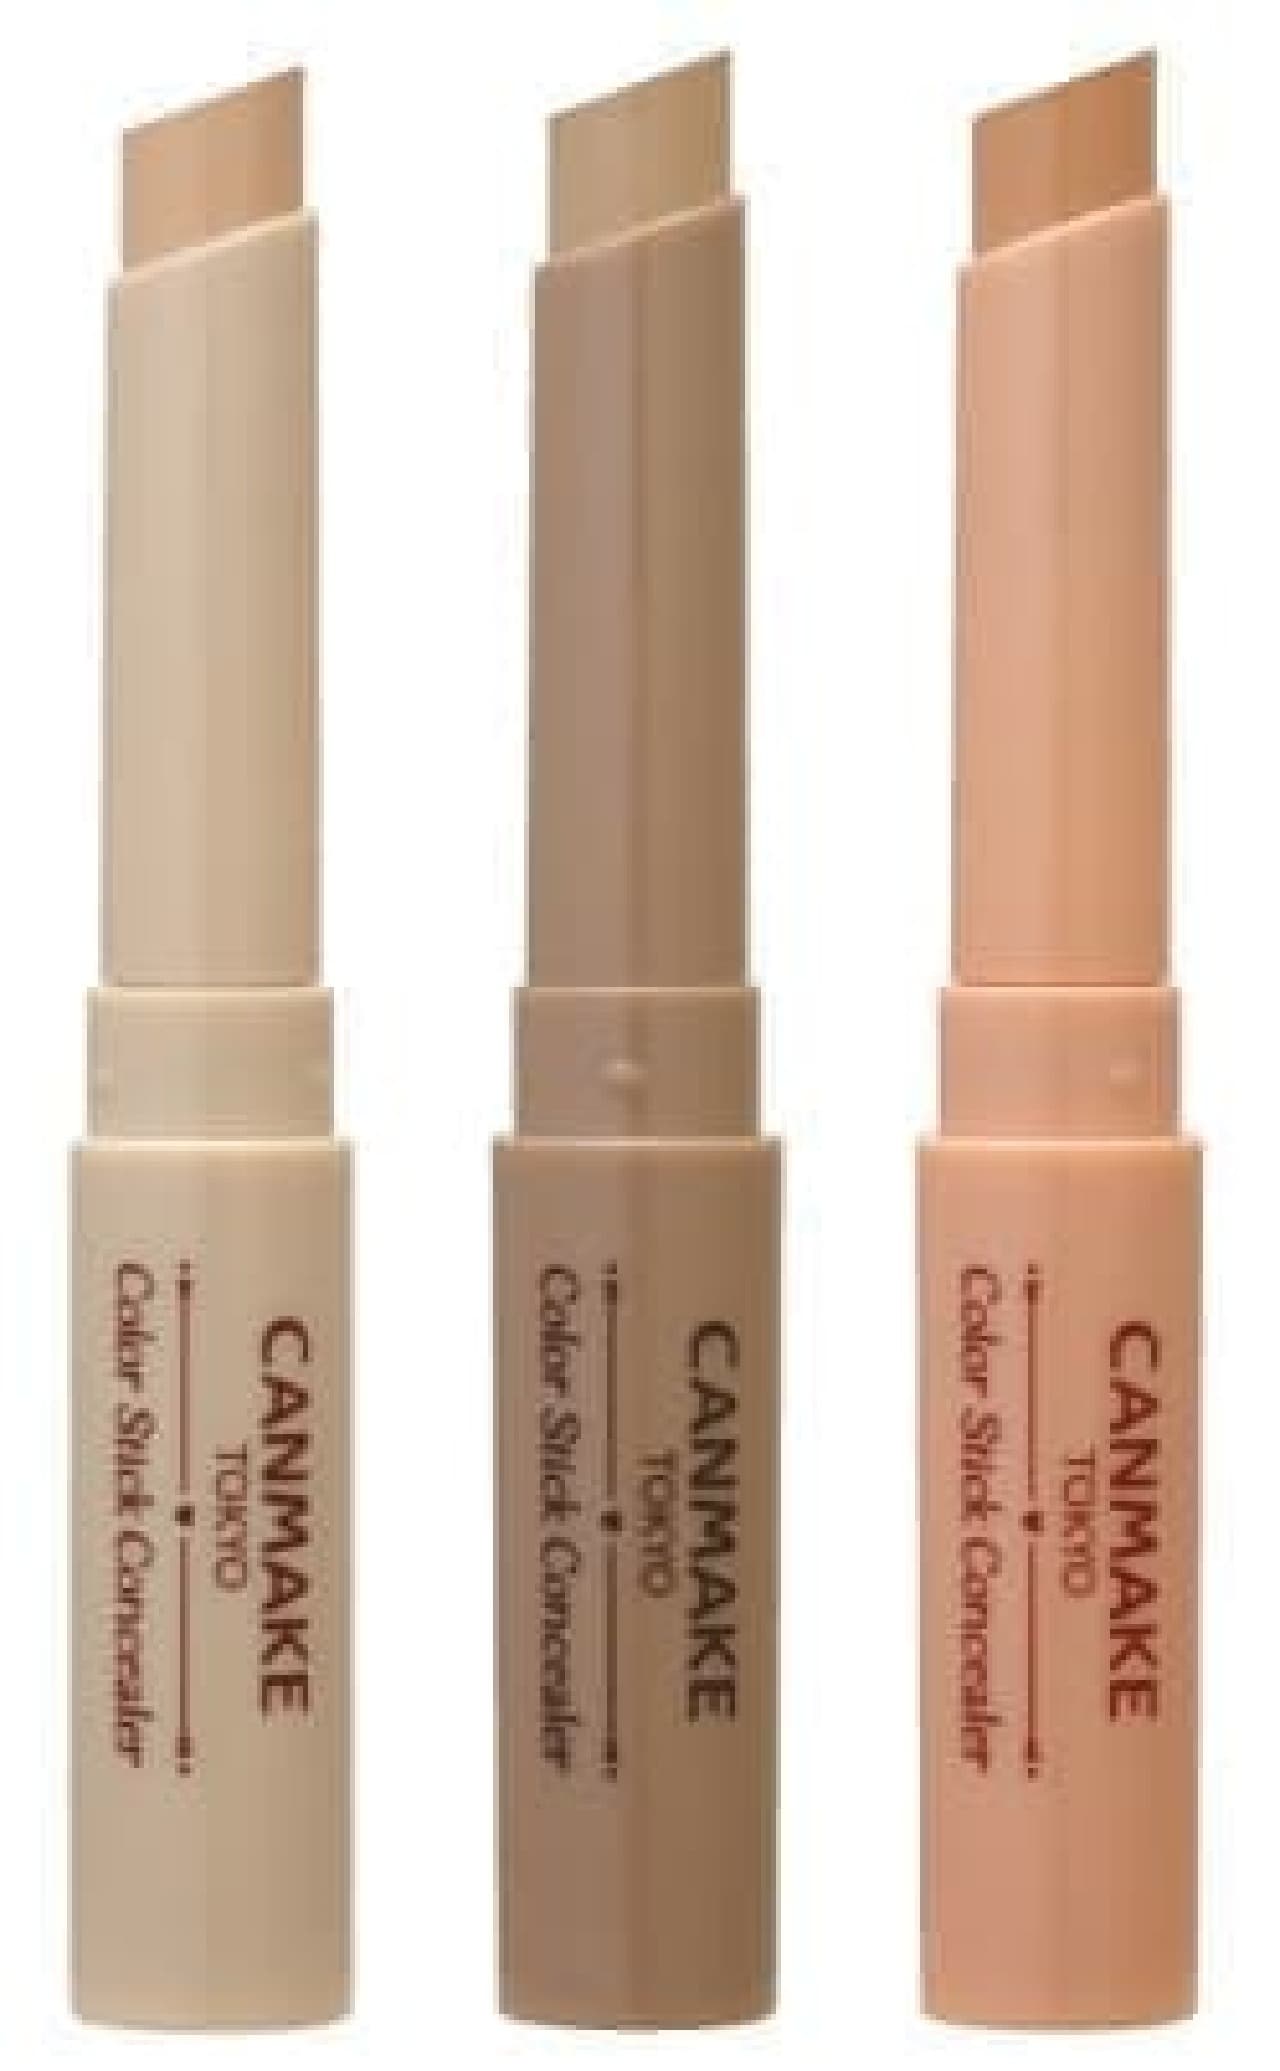 Canmake's "Color Stick Concealer"